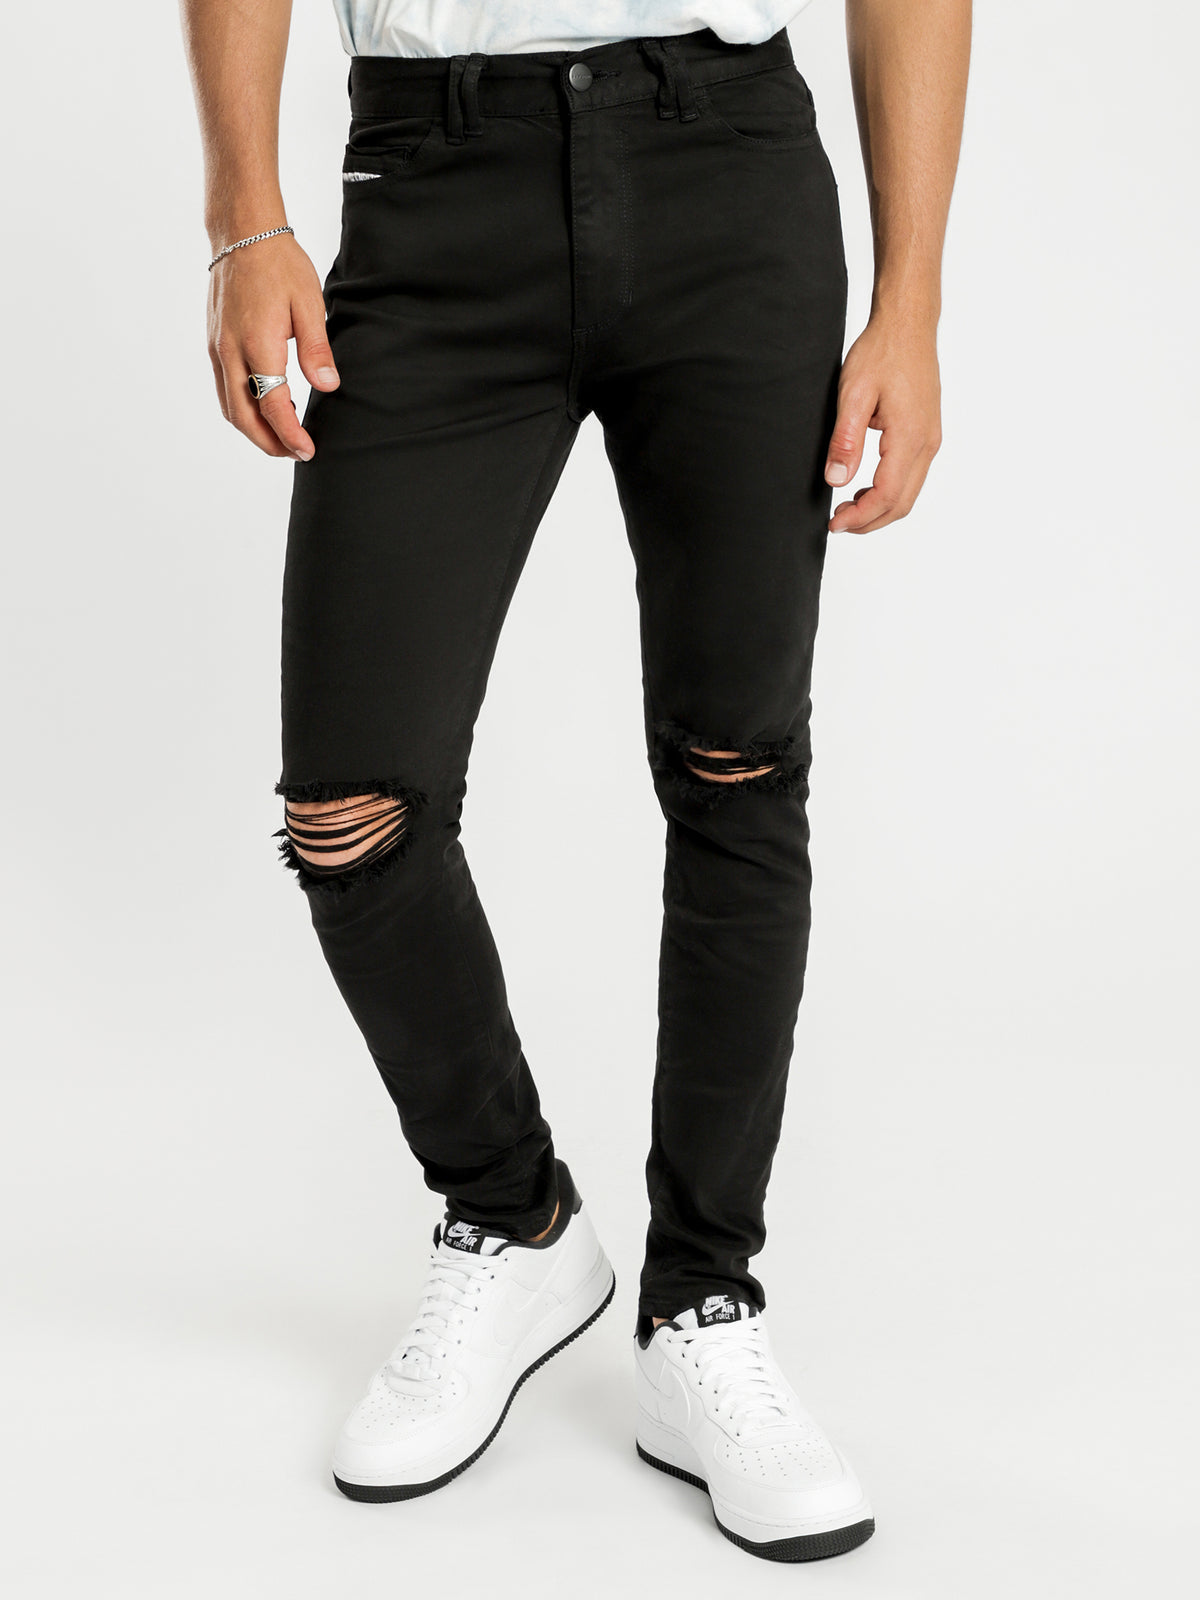 Flynn 5 Pocket Skinny Fit Jeans in Black